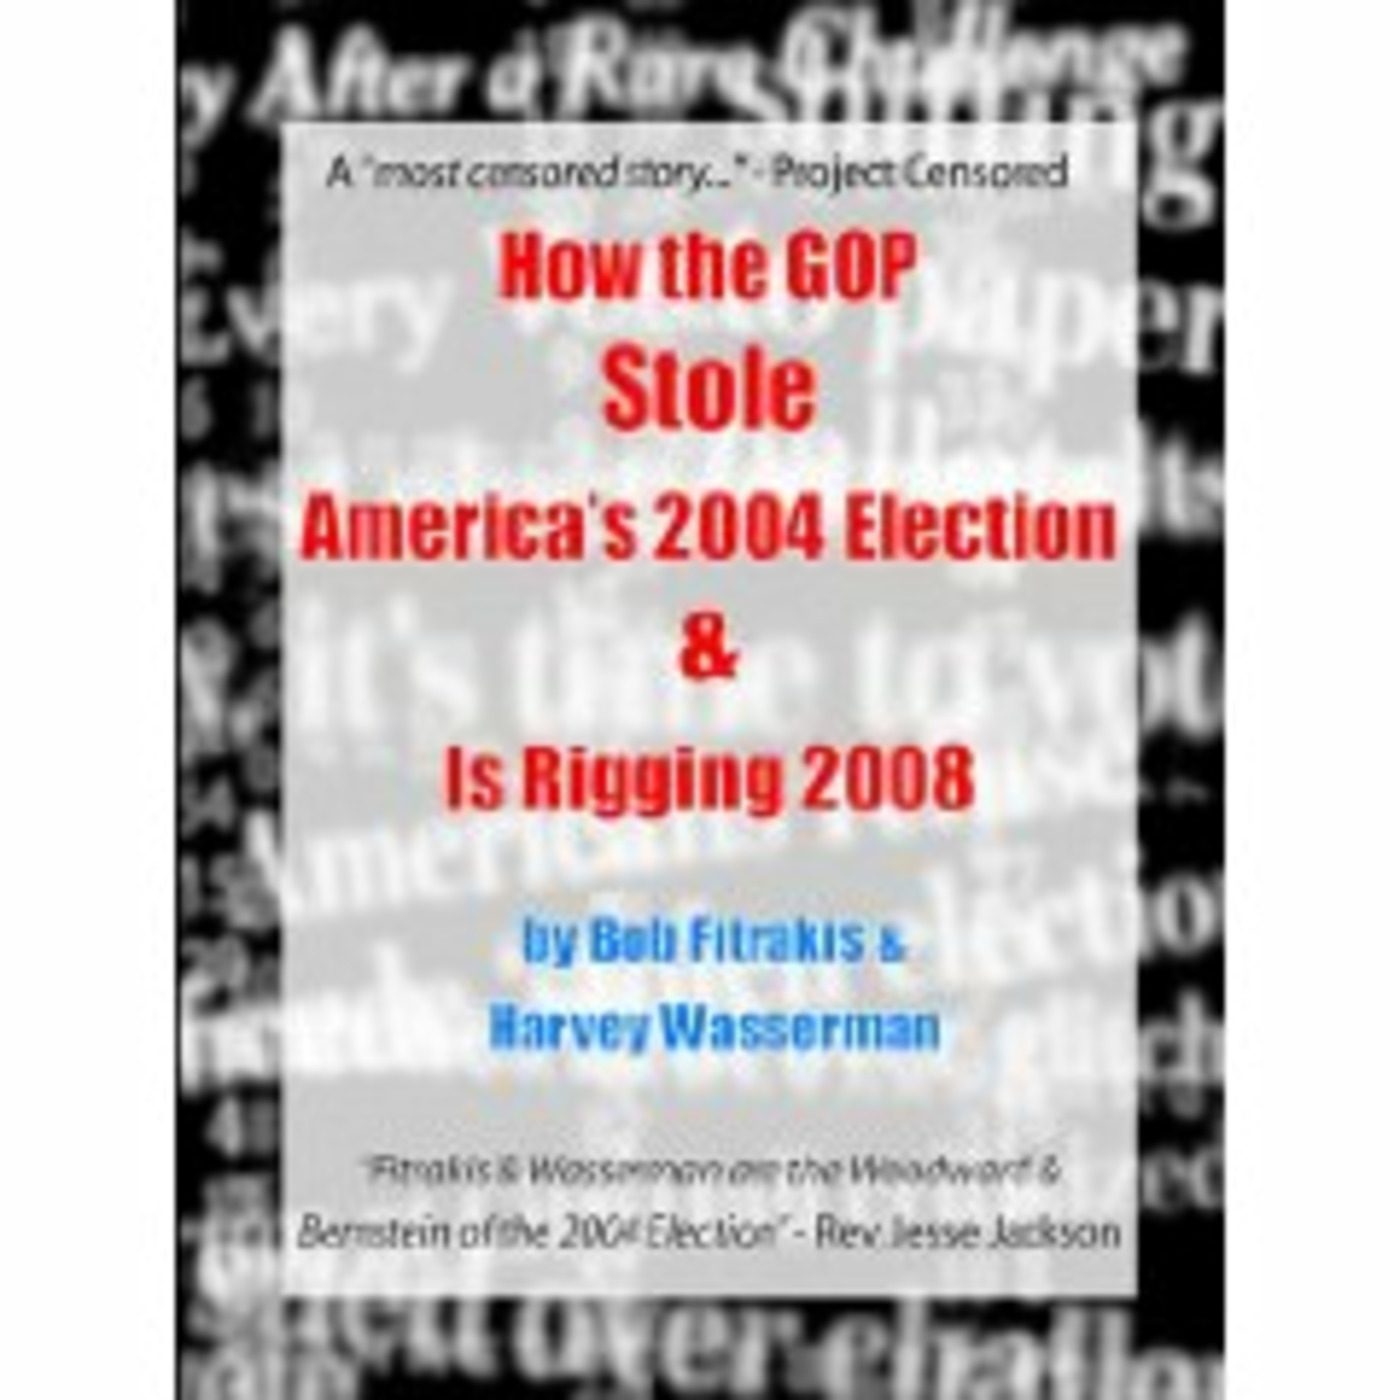 Q&A: HARVEY WASSERMAN, Author